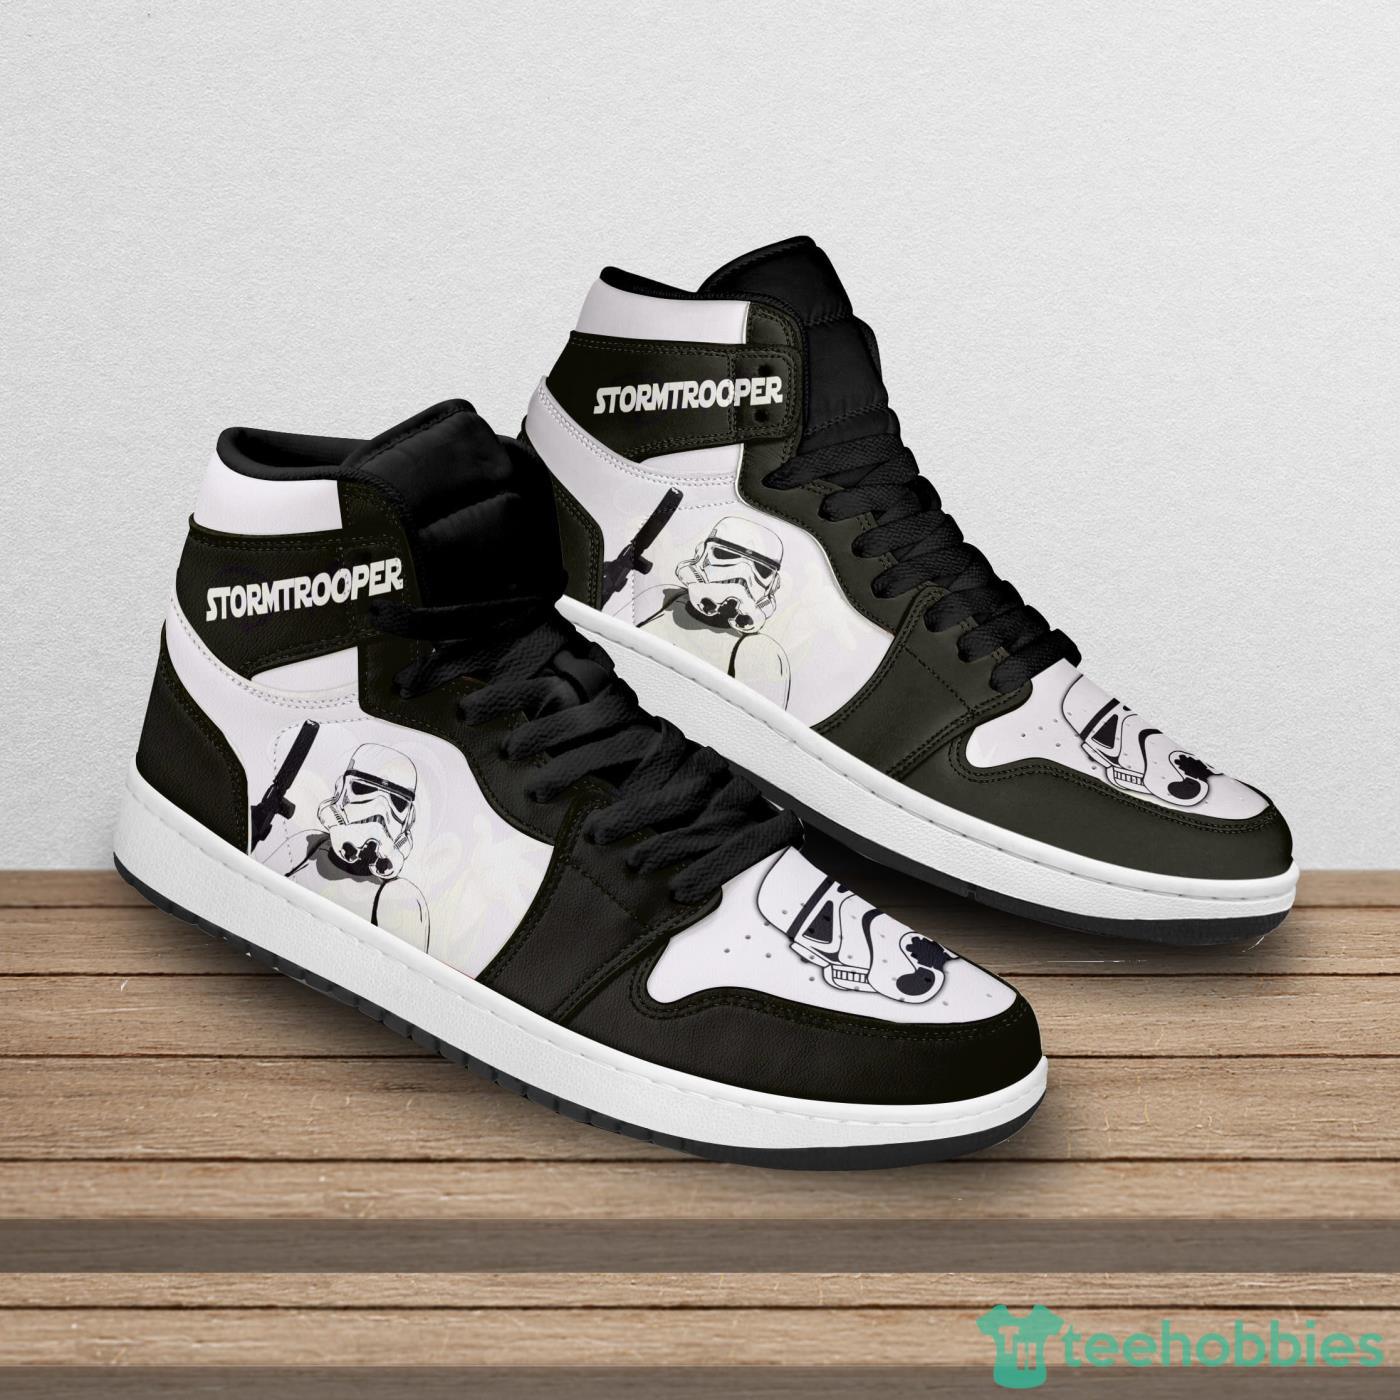 Star Wars Stormtrooper Black White Disney Air Jordan Hightop Sneakers Boots Product Photo 1